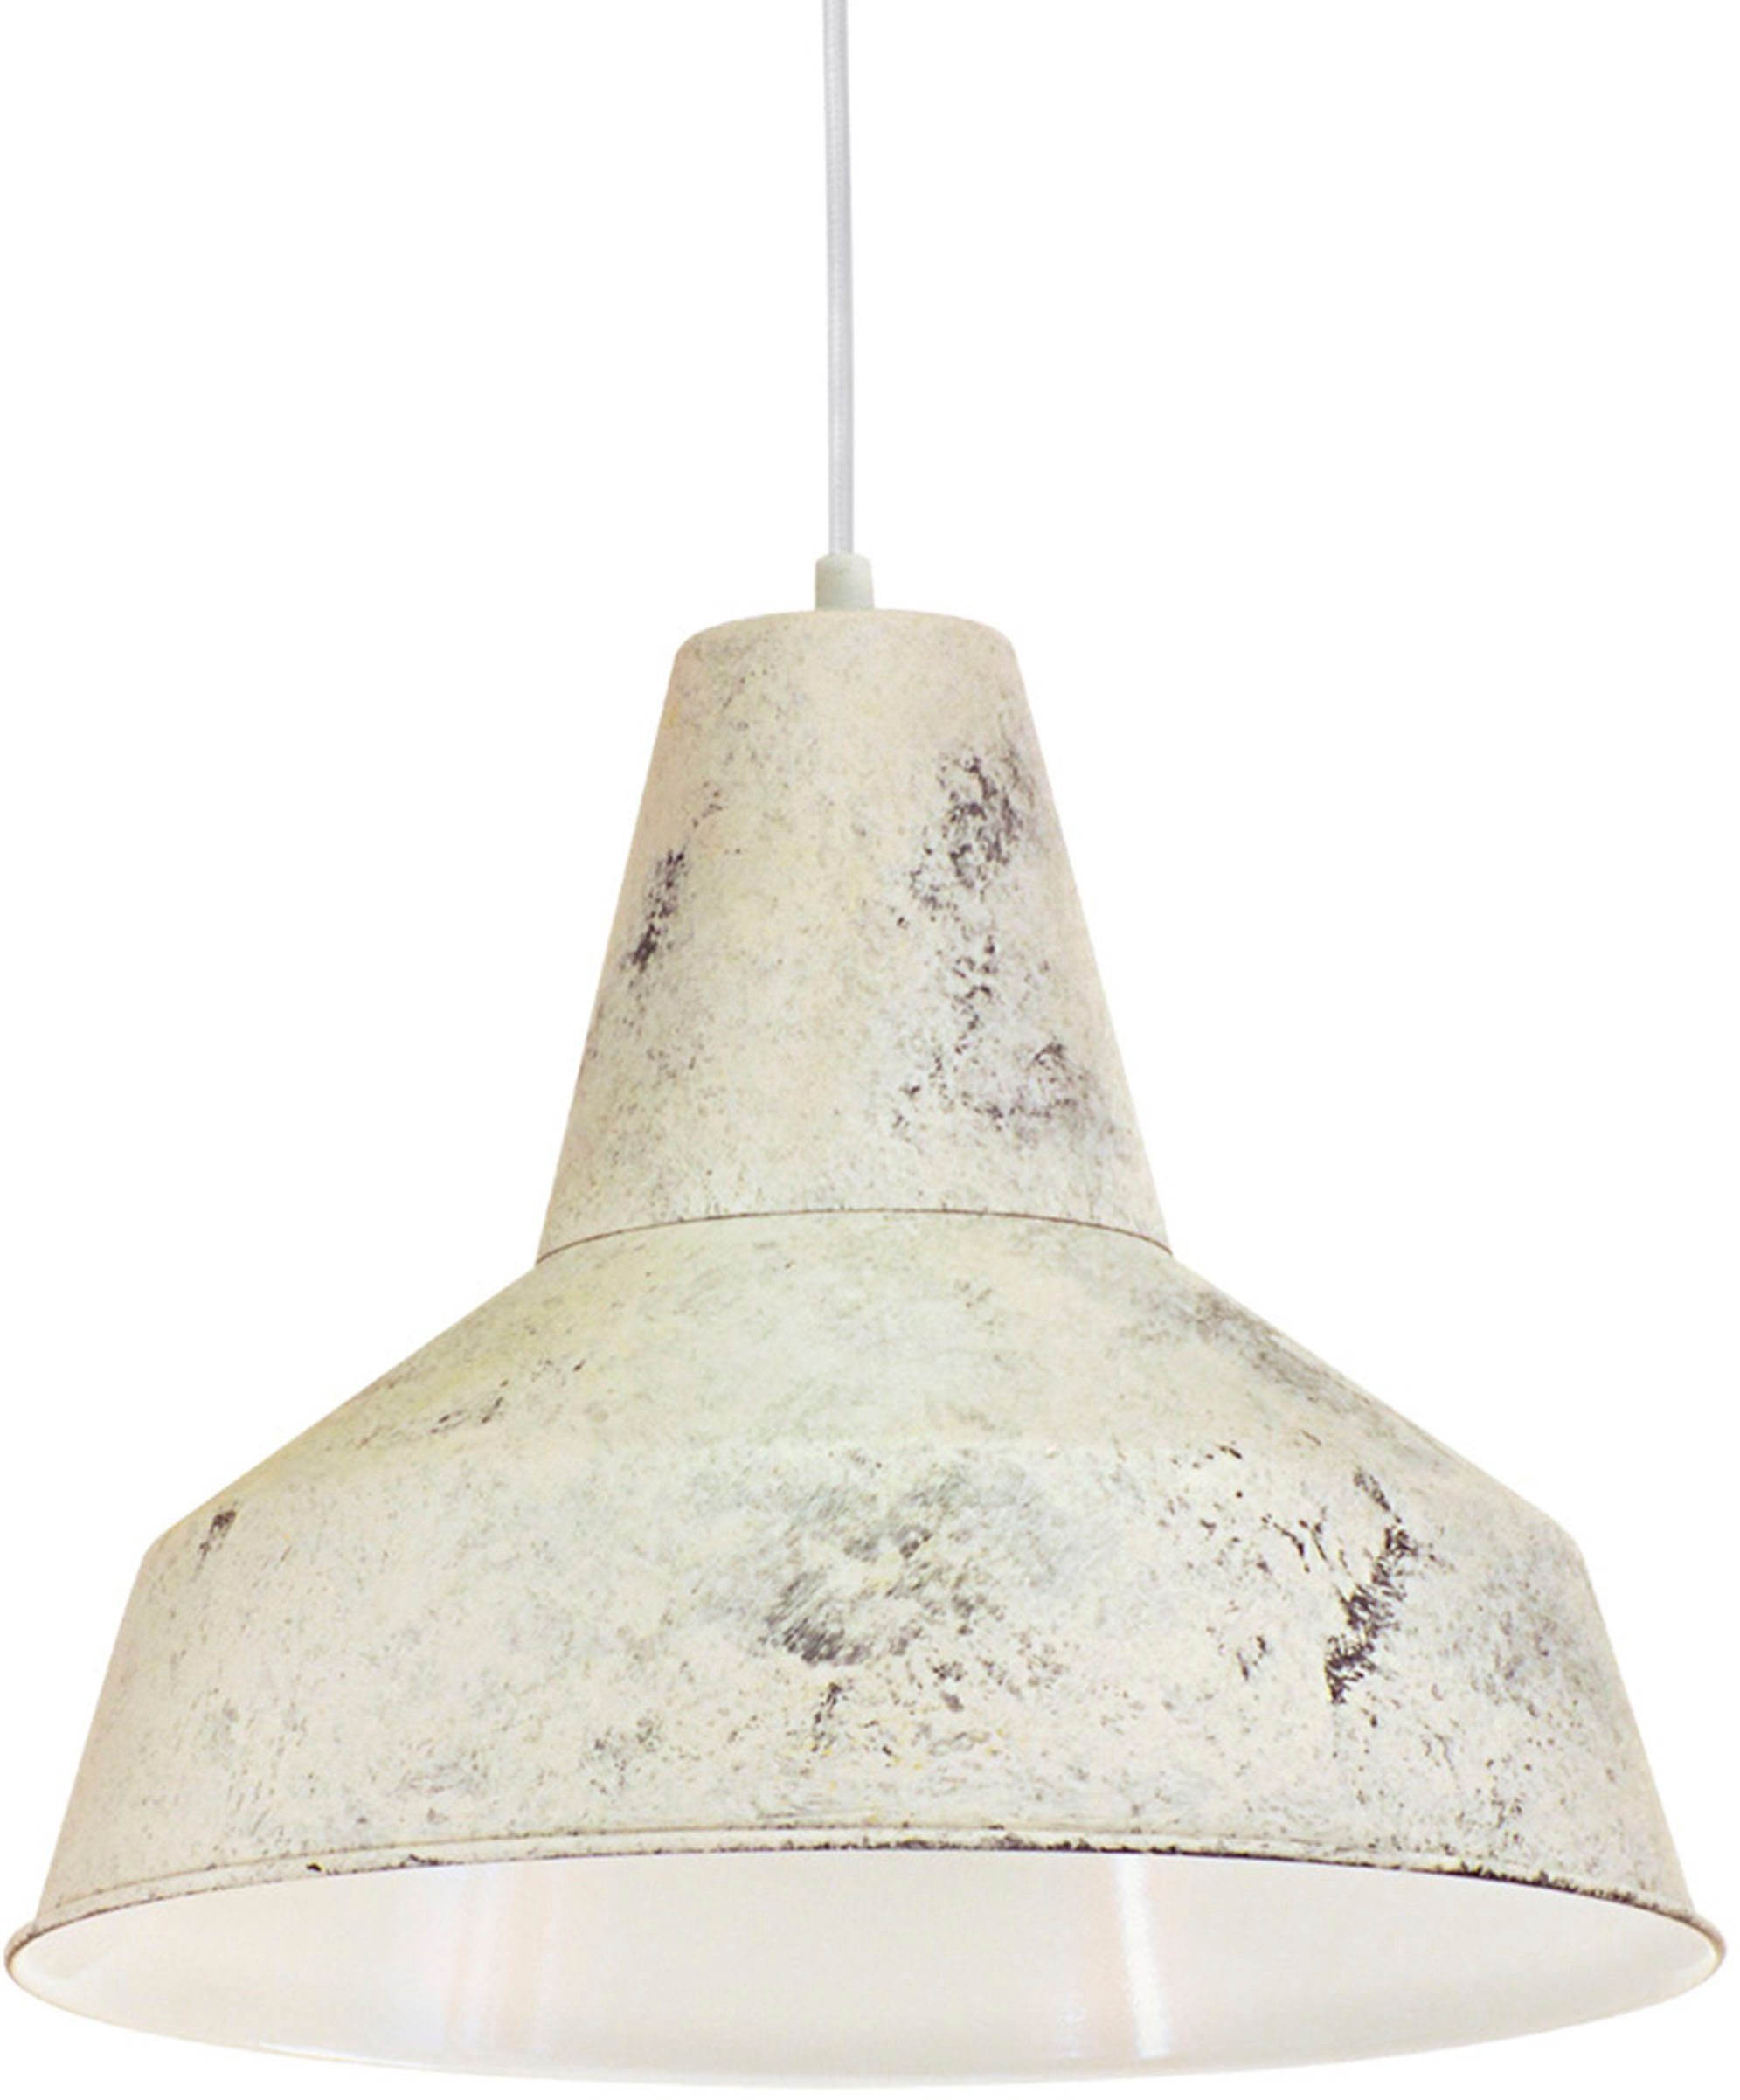 SOMERTON hanglamp Vintage by Eglo 49249